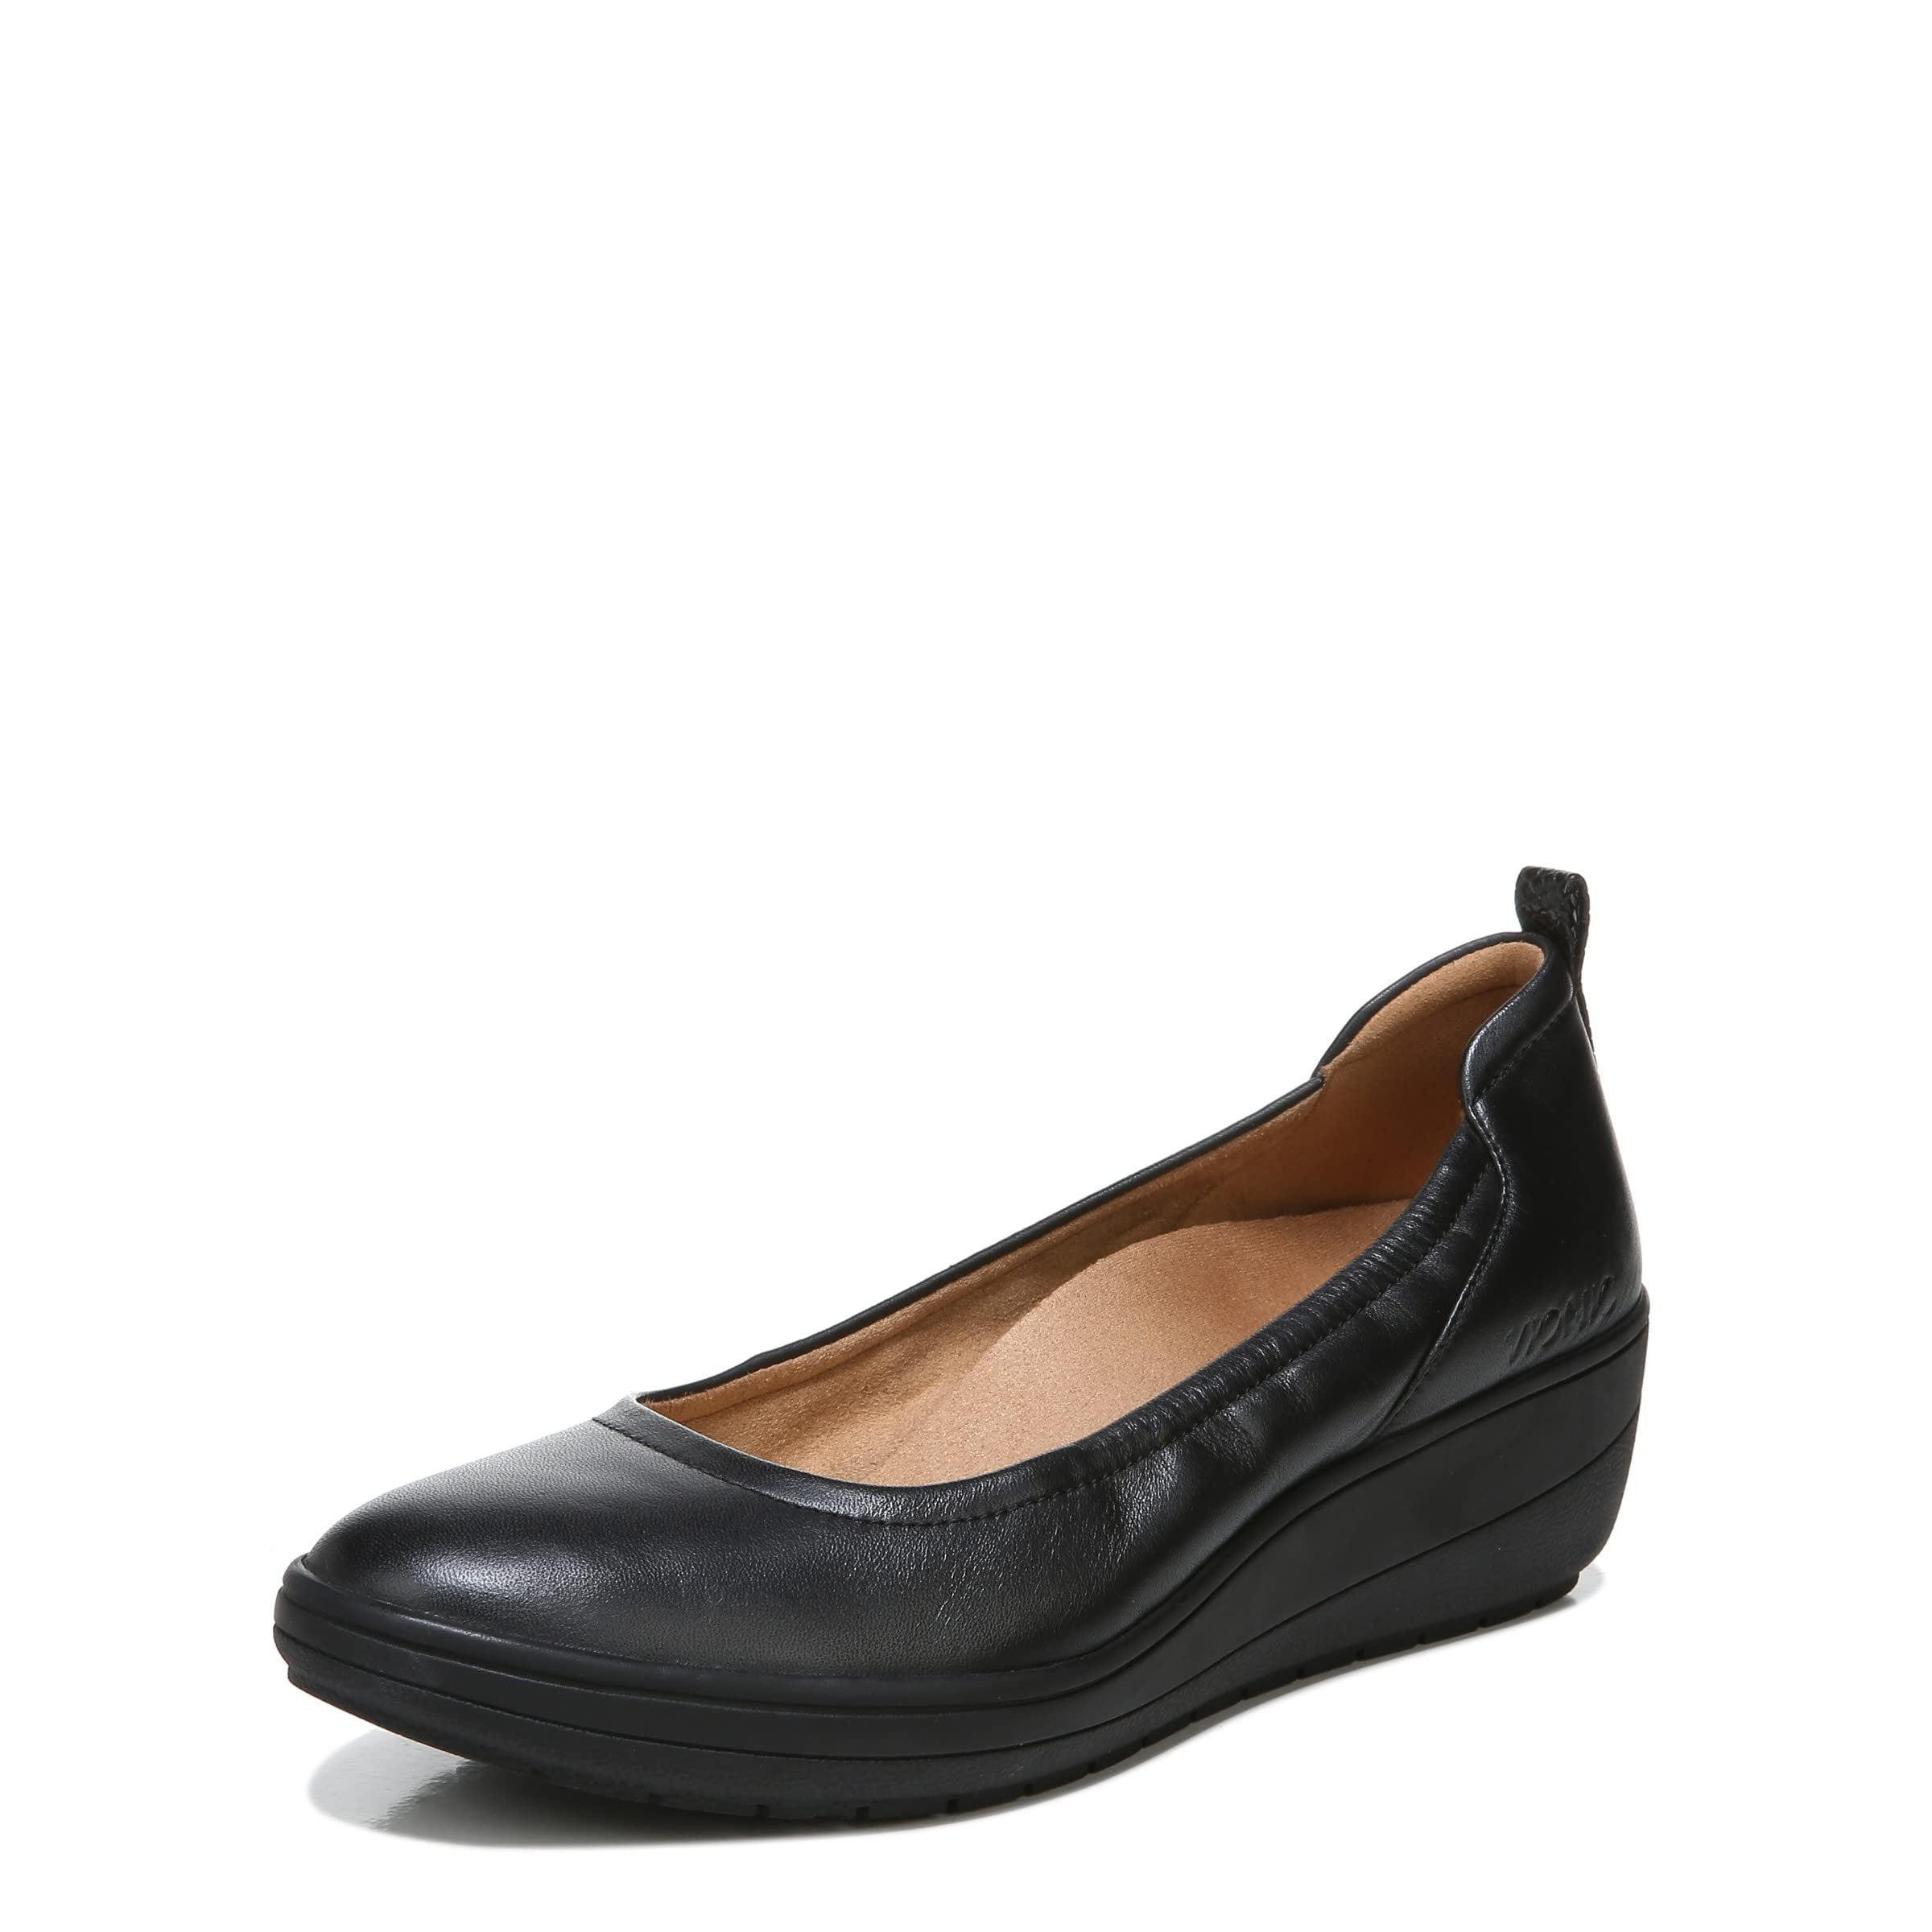 Vionic Jacey Women's Slip-on Wedge Shoe Black/black Leather - 7.5 Medium